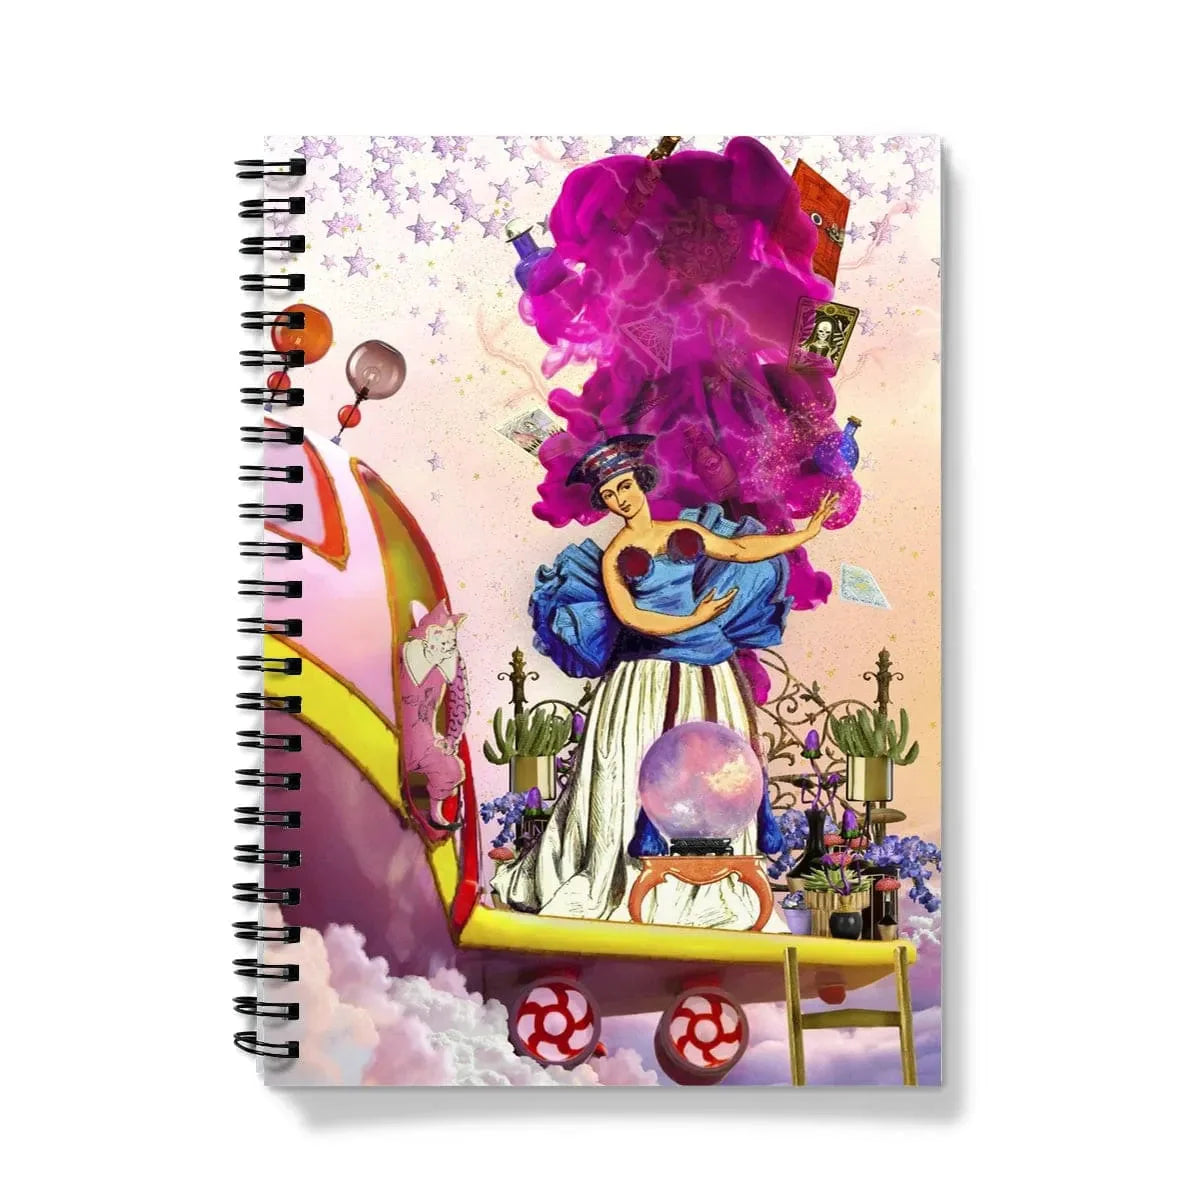 Darla The Divine Notebook - A5 - Graph Paper - Notebooks & Notepads - Aesthetic Art